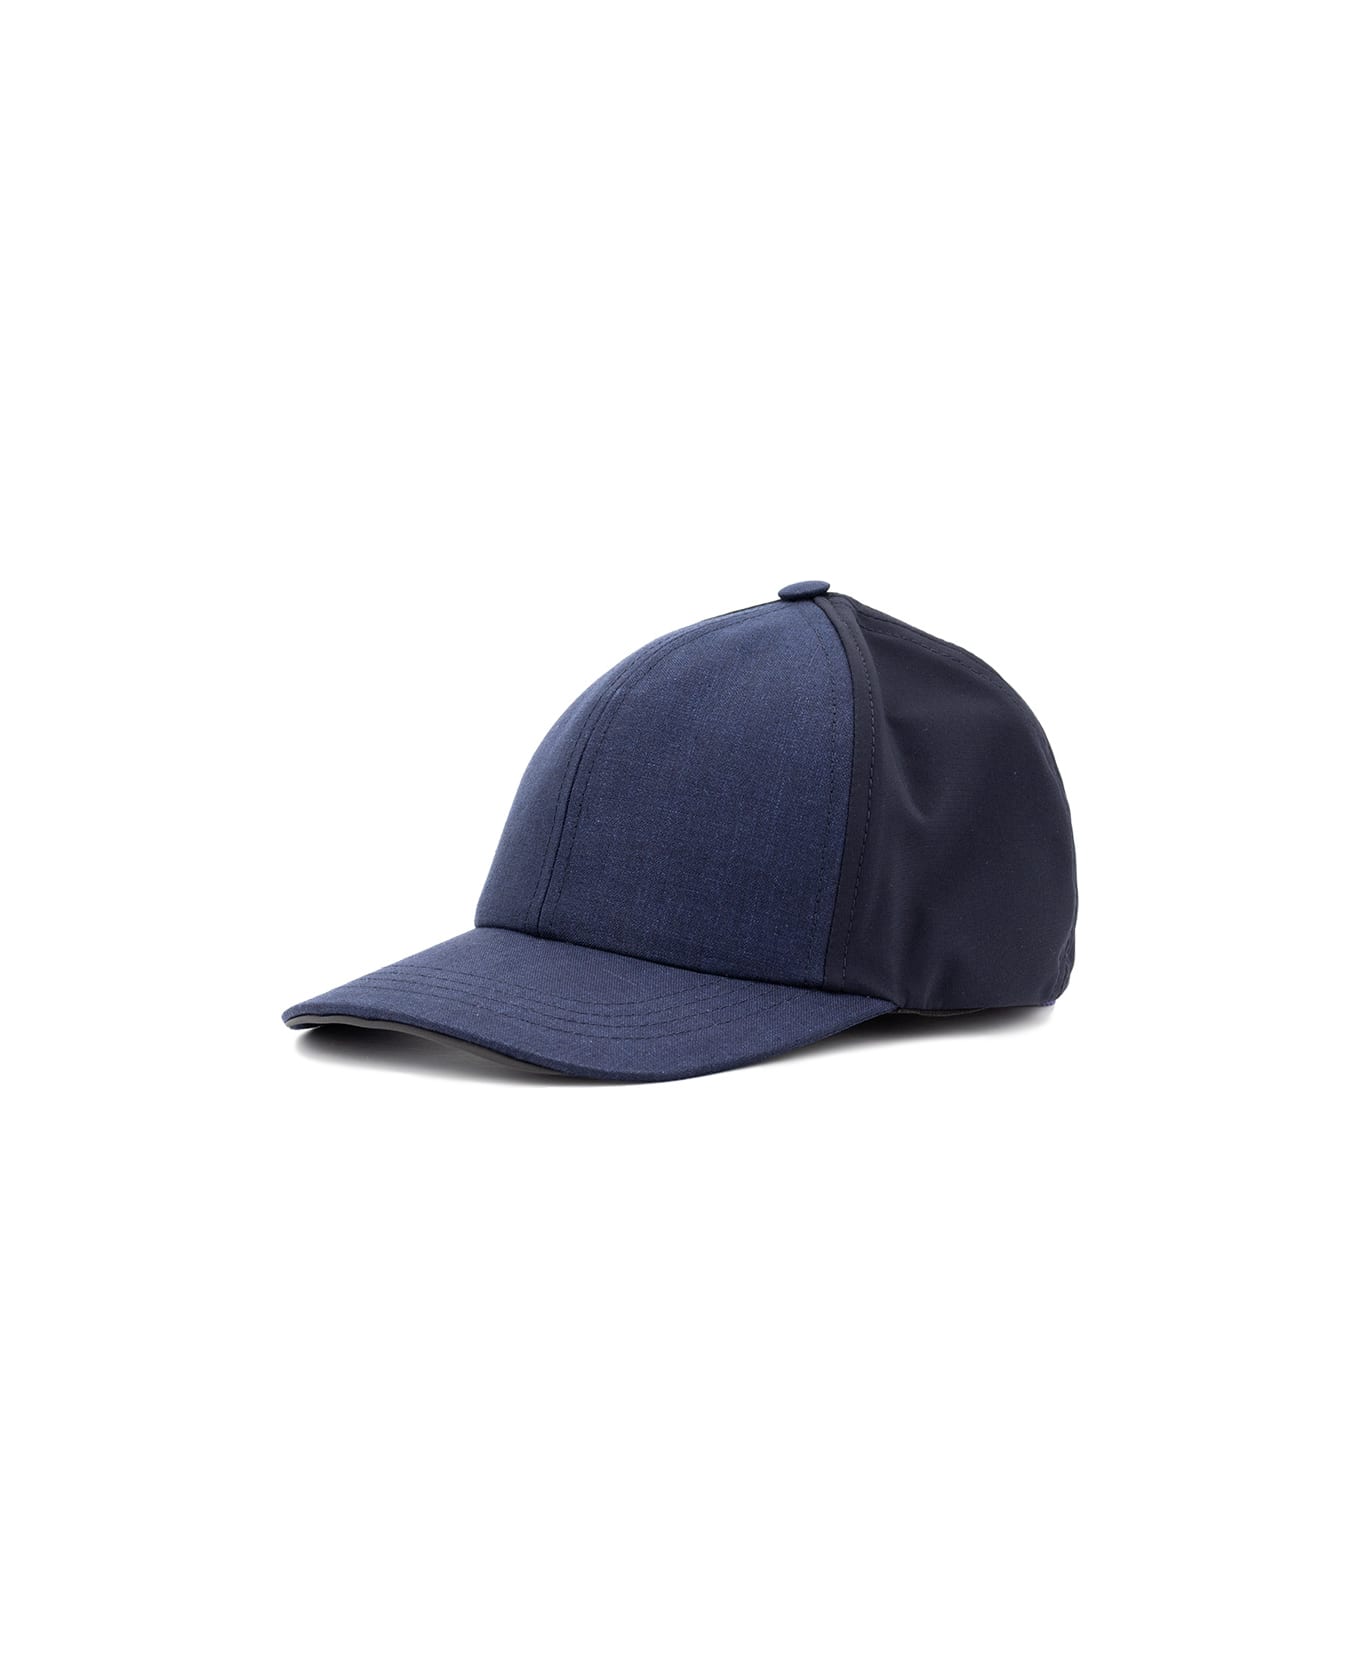 Sease Hat - NAVY BLUE 帽子